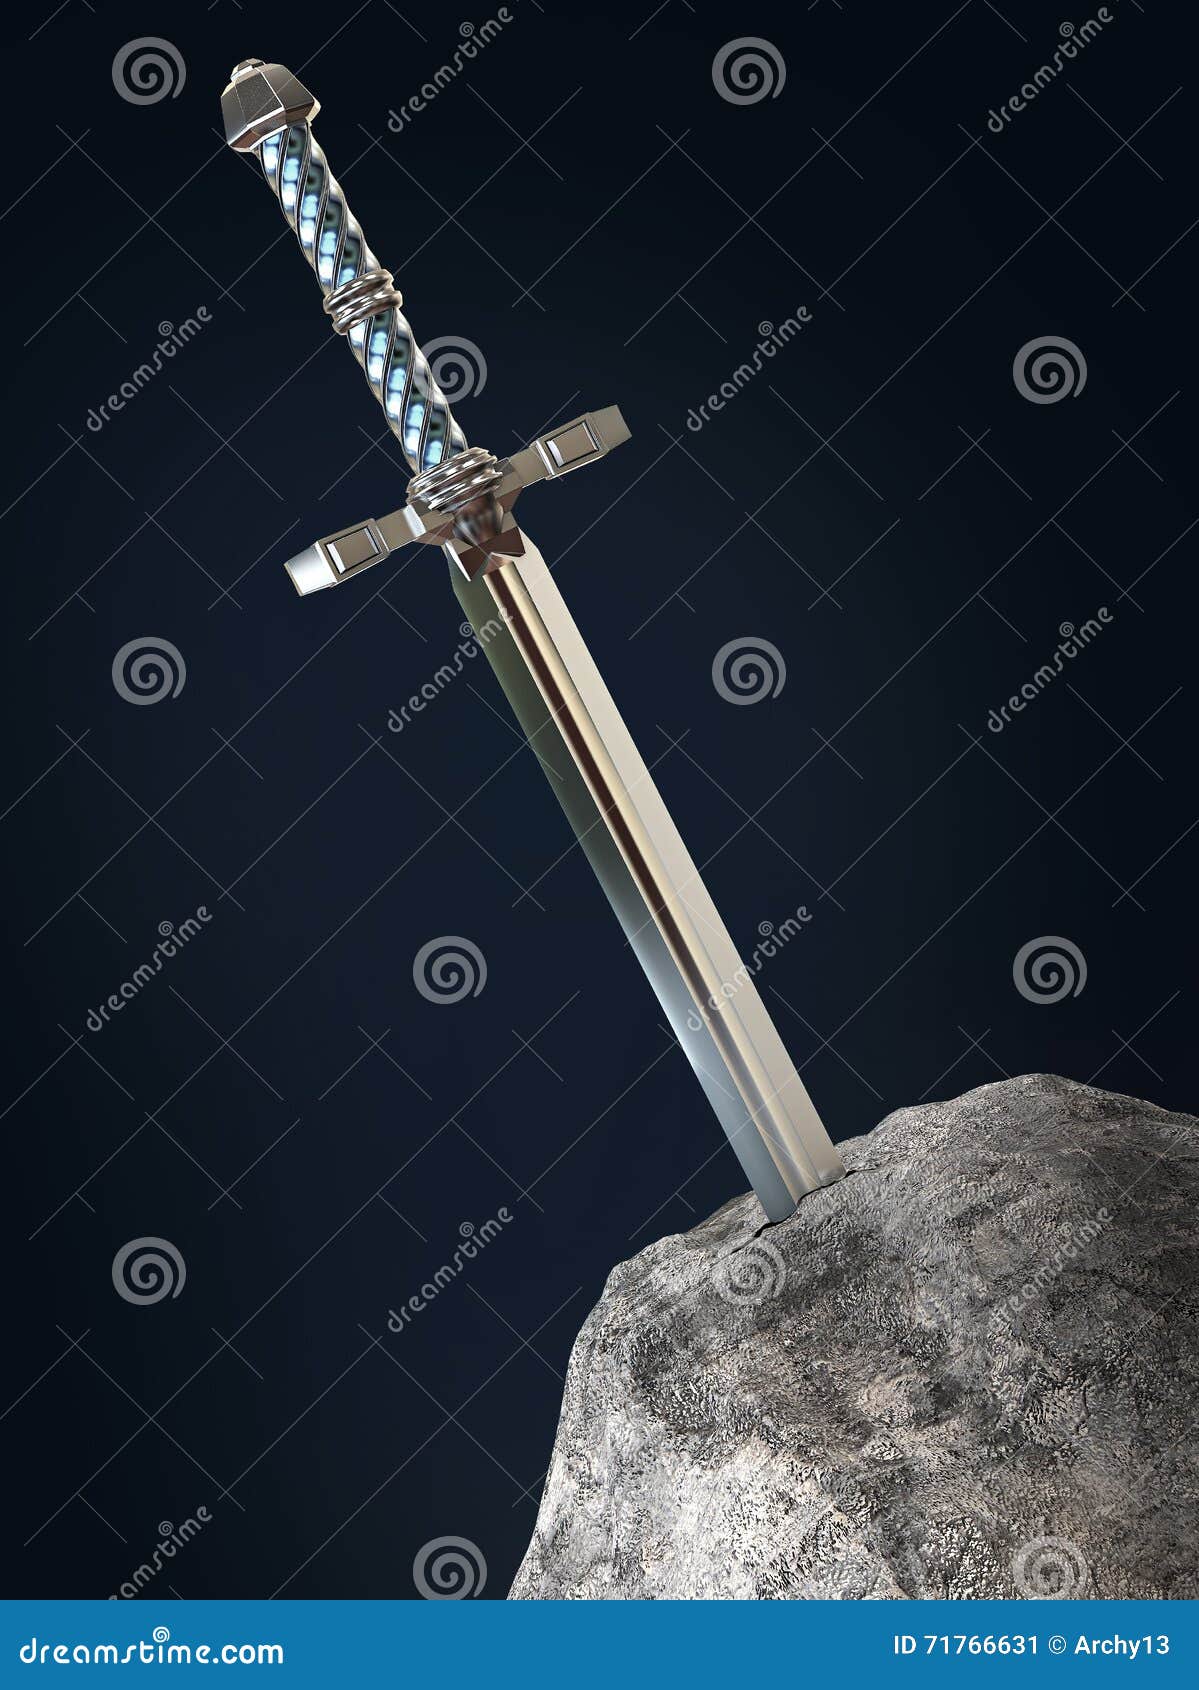 sword excalibur king arthur stuck in the rock stone  render. metaphor of candidate applicant test